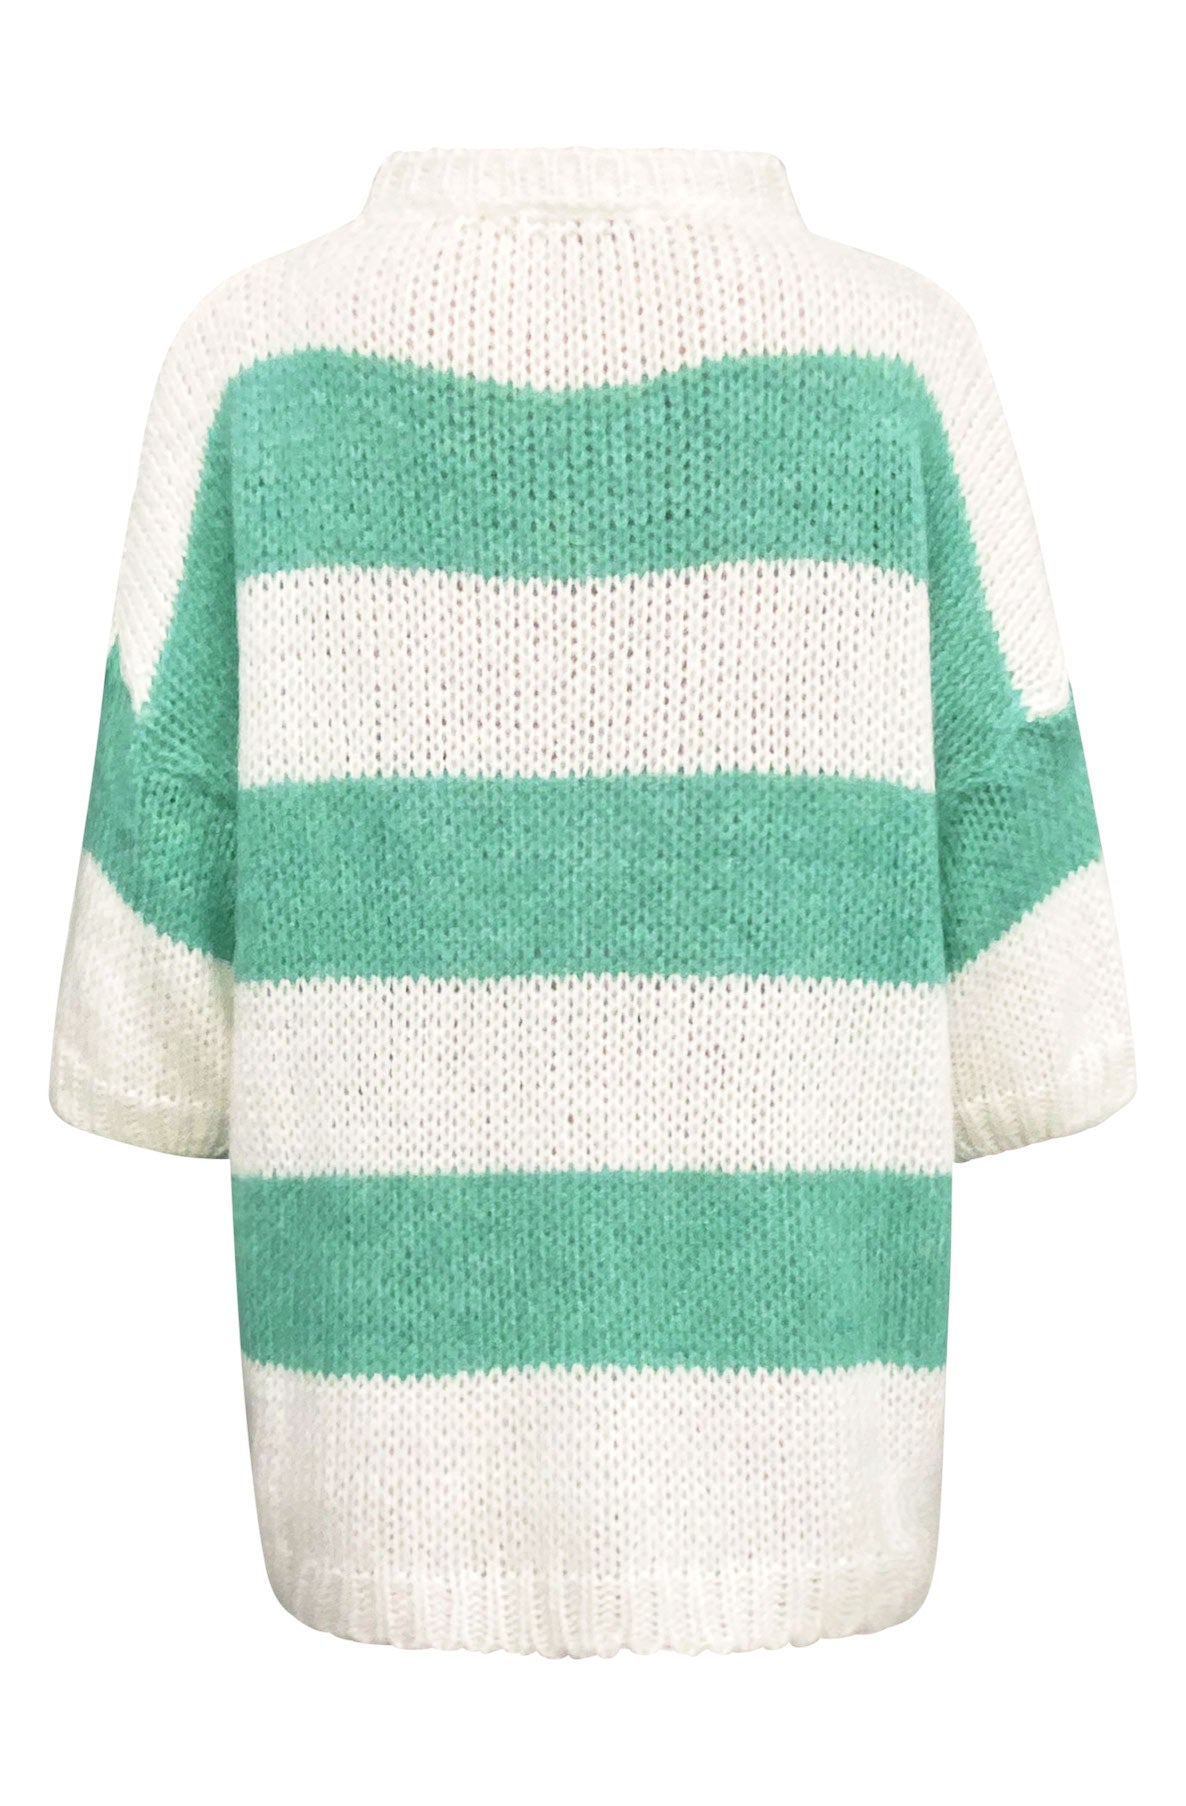 Binka Striped Knitted Jumper Sweater Top-Green